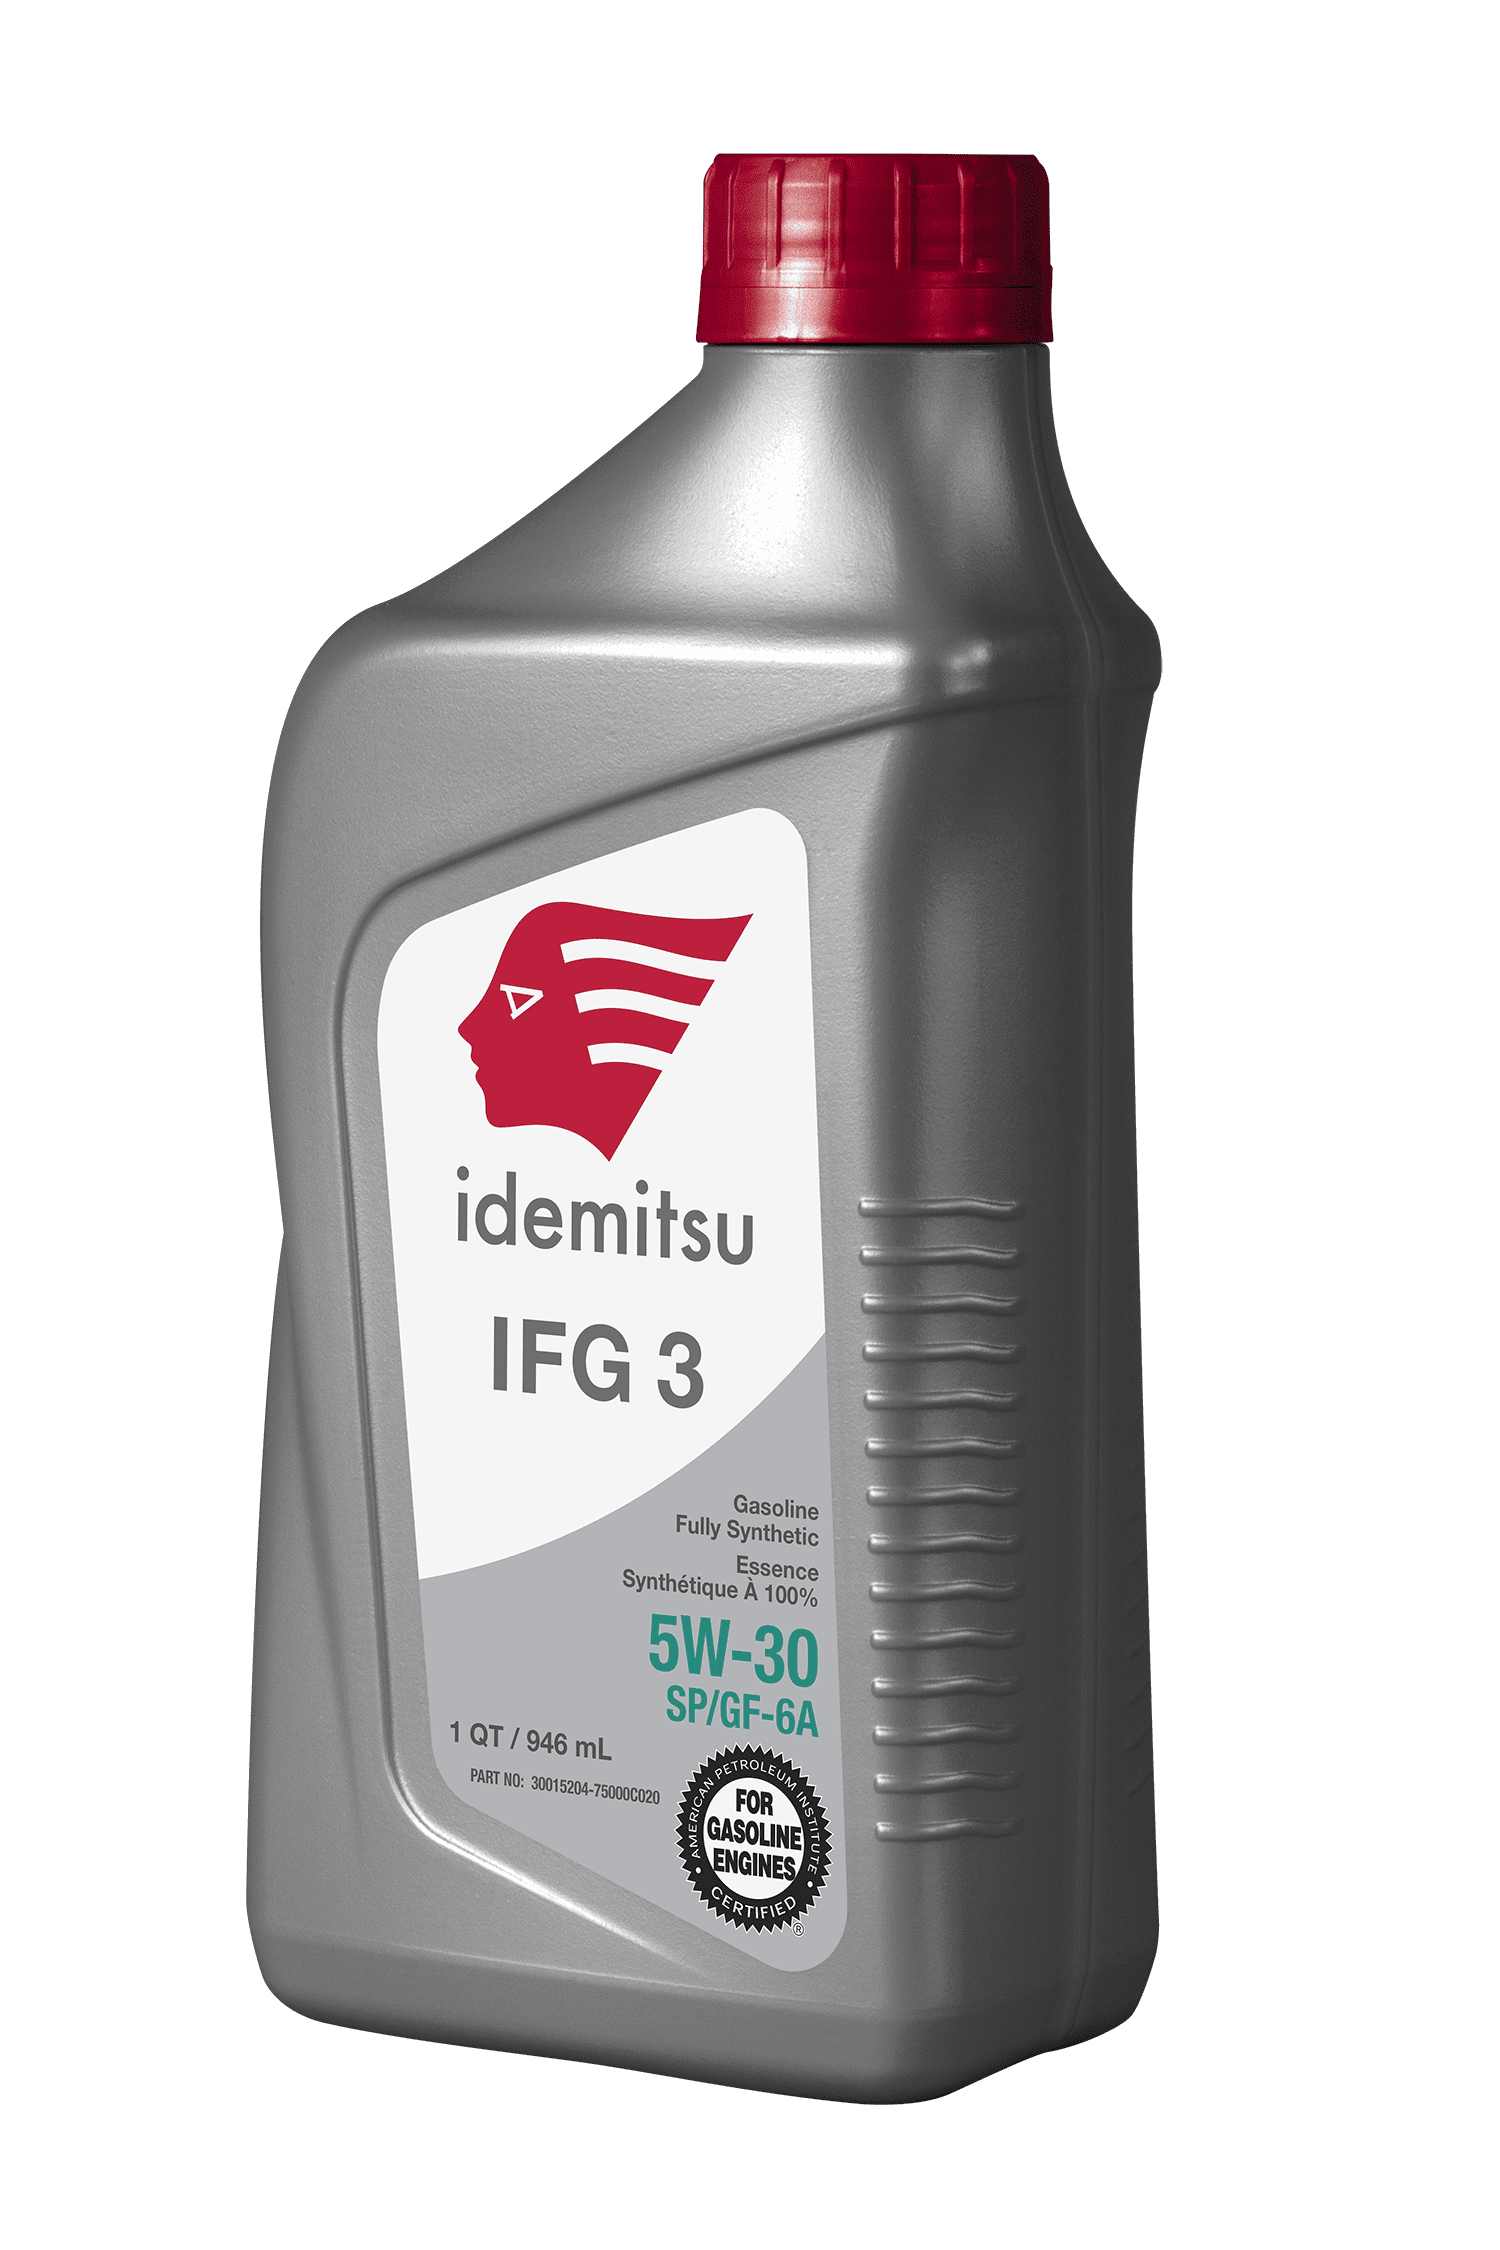 IDEMITSU IFG3 5W-30 SP/GF-6A Motor Oil - 1 qt, Case of 12